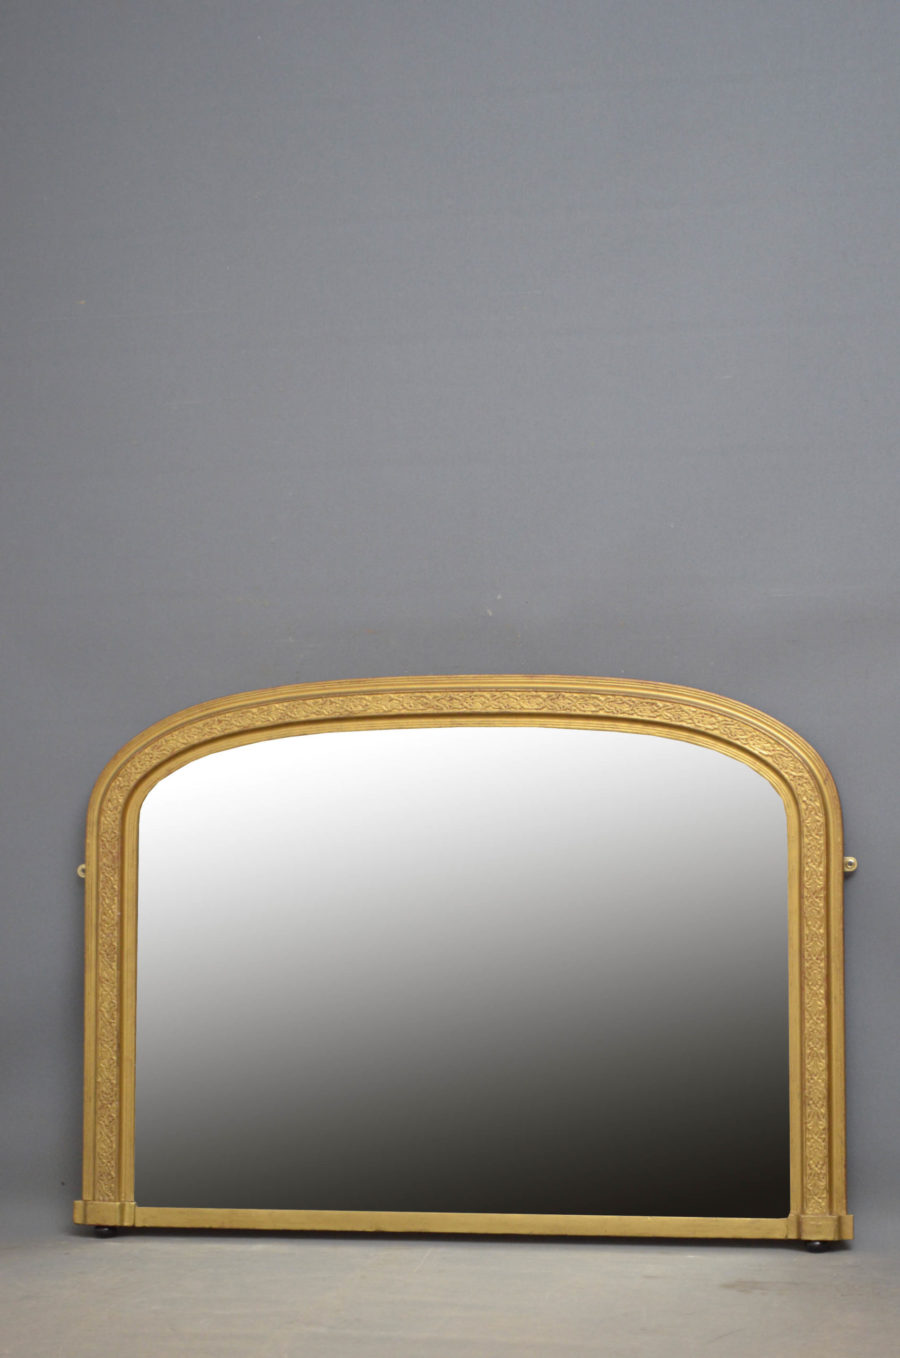 Victorian Gilt Overmantel Mirror